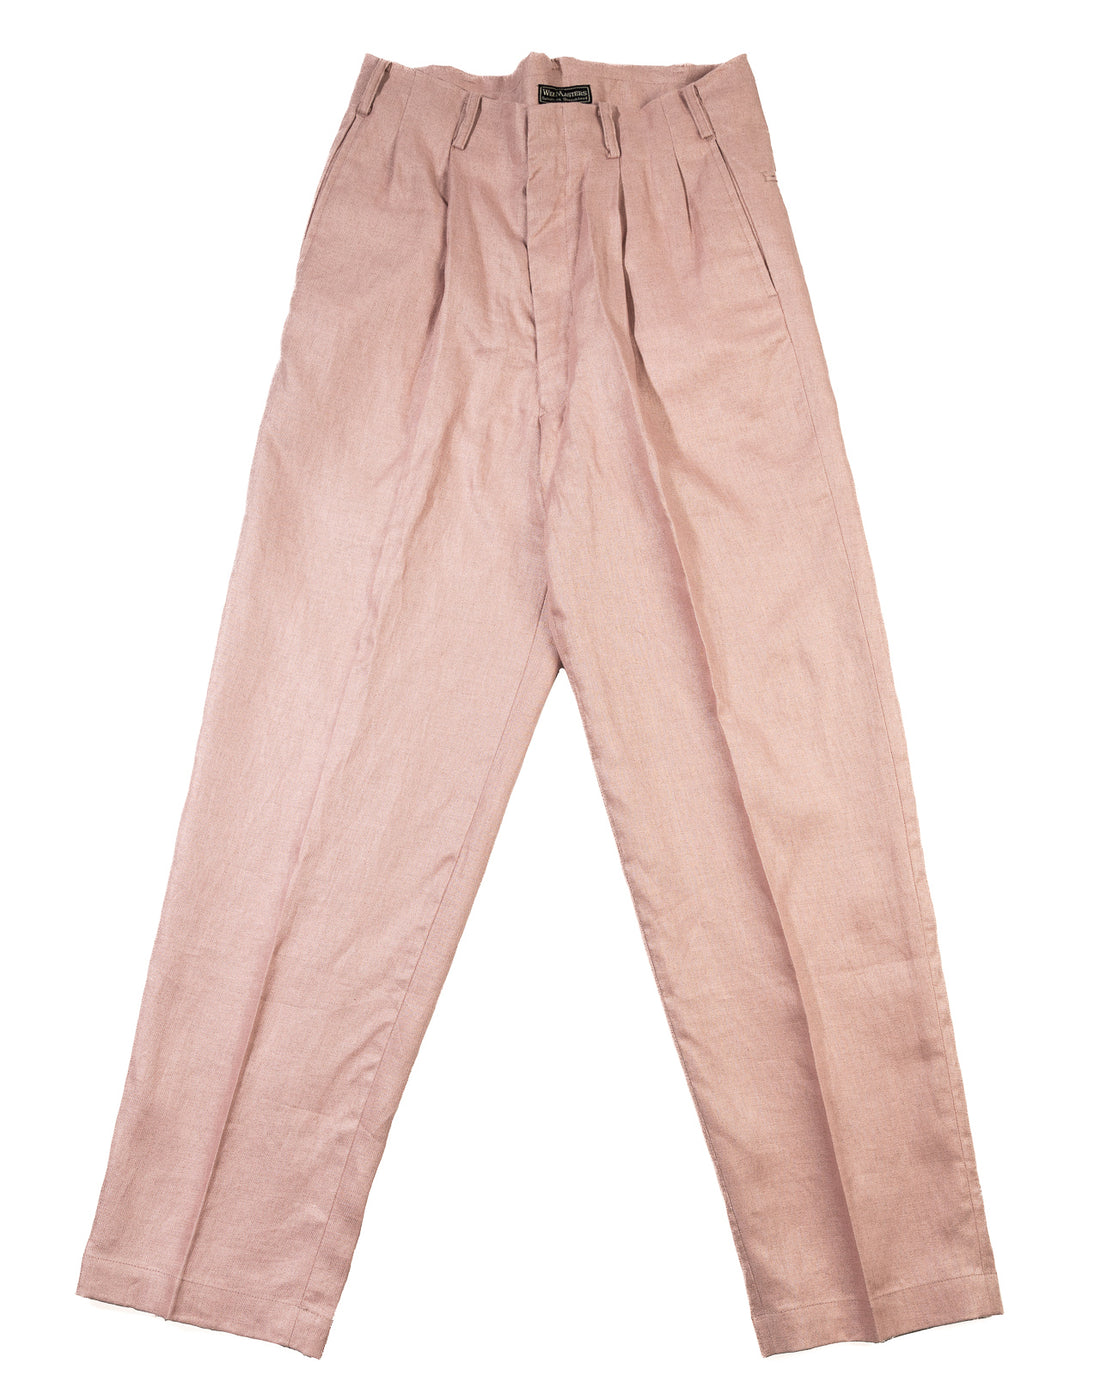 Attractions Double Pleats Linen Trousers - Pink - Standard & Strange